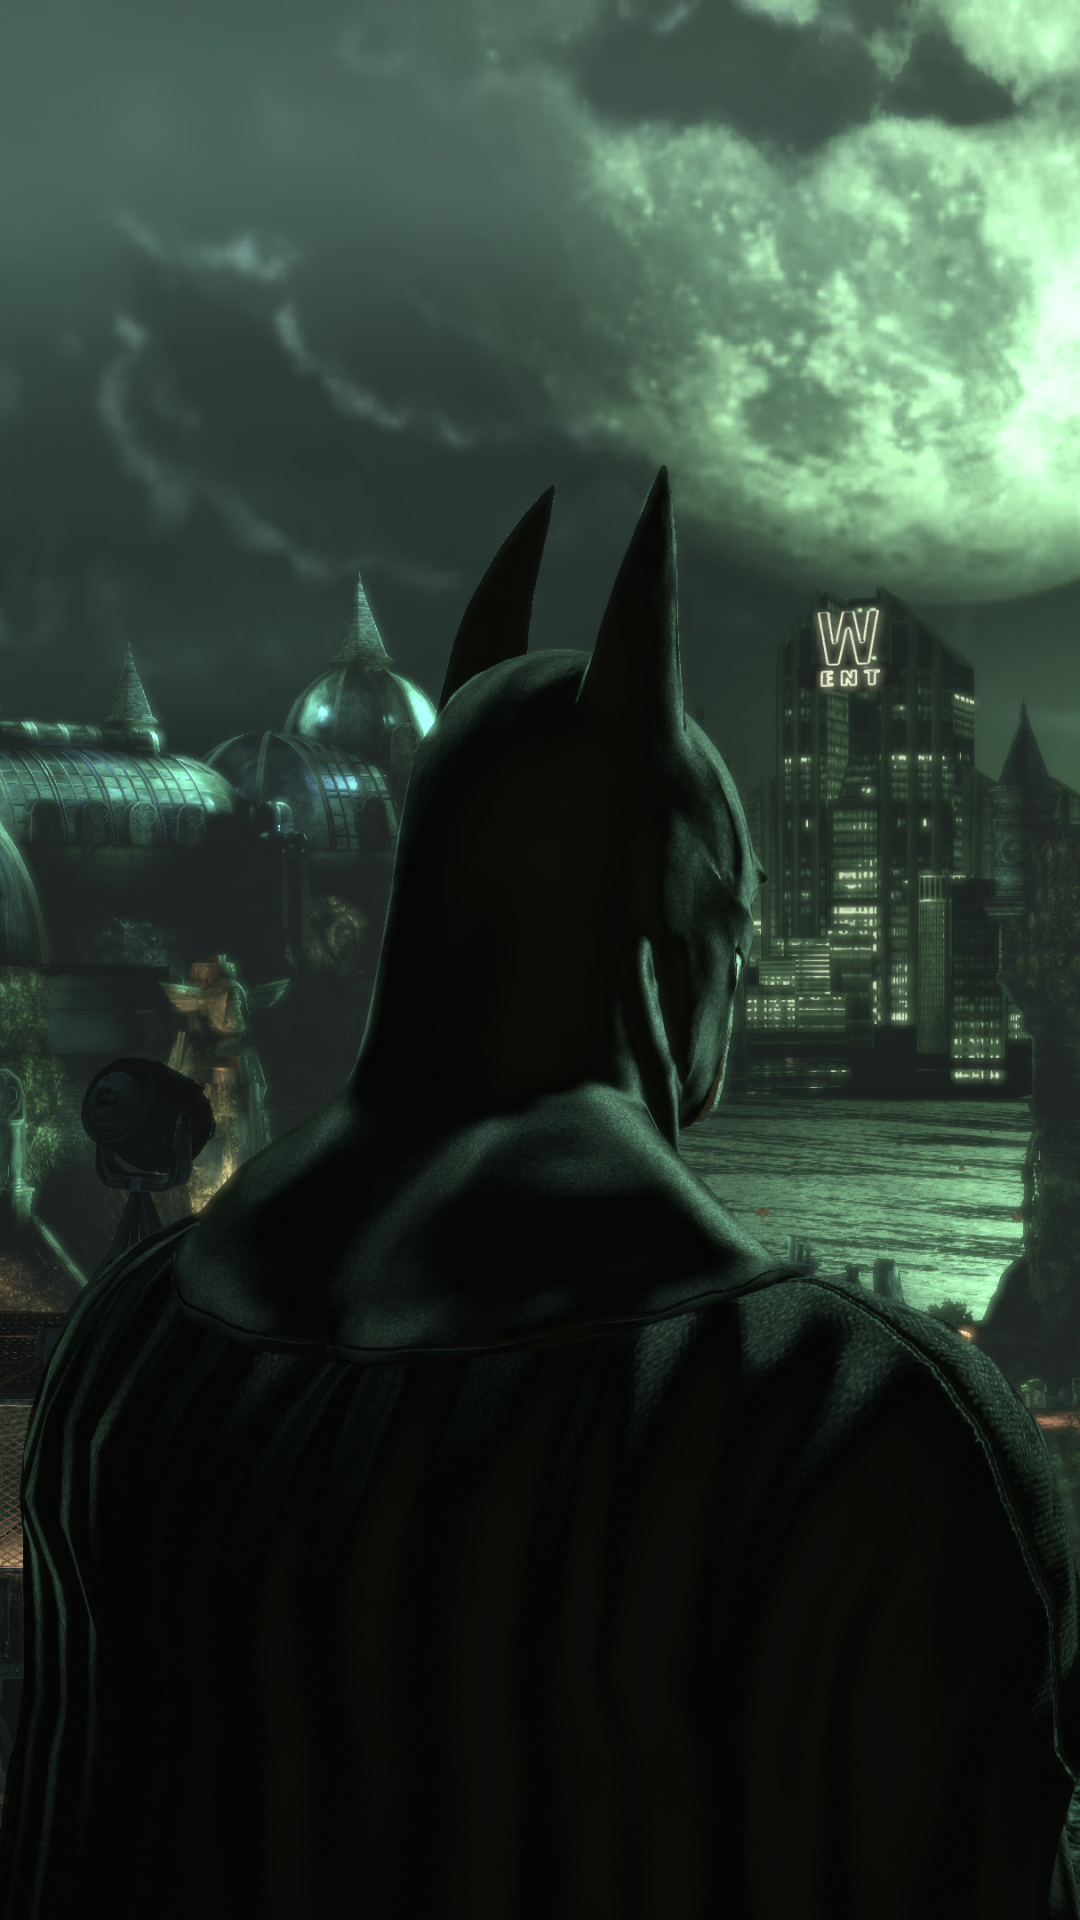 Скачать картинку Видеоигры, Бэтмен, Бэтмен: Лечебница Аркхема в телефон бесплатно.